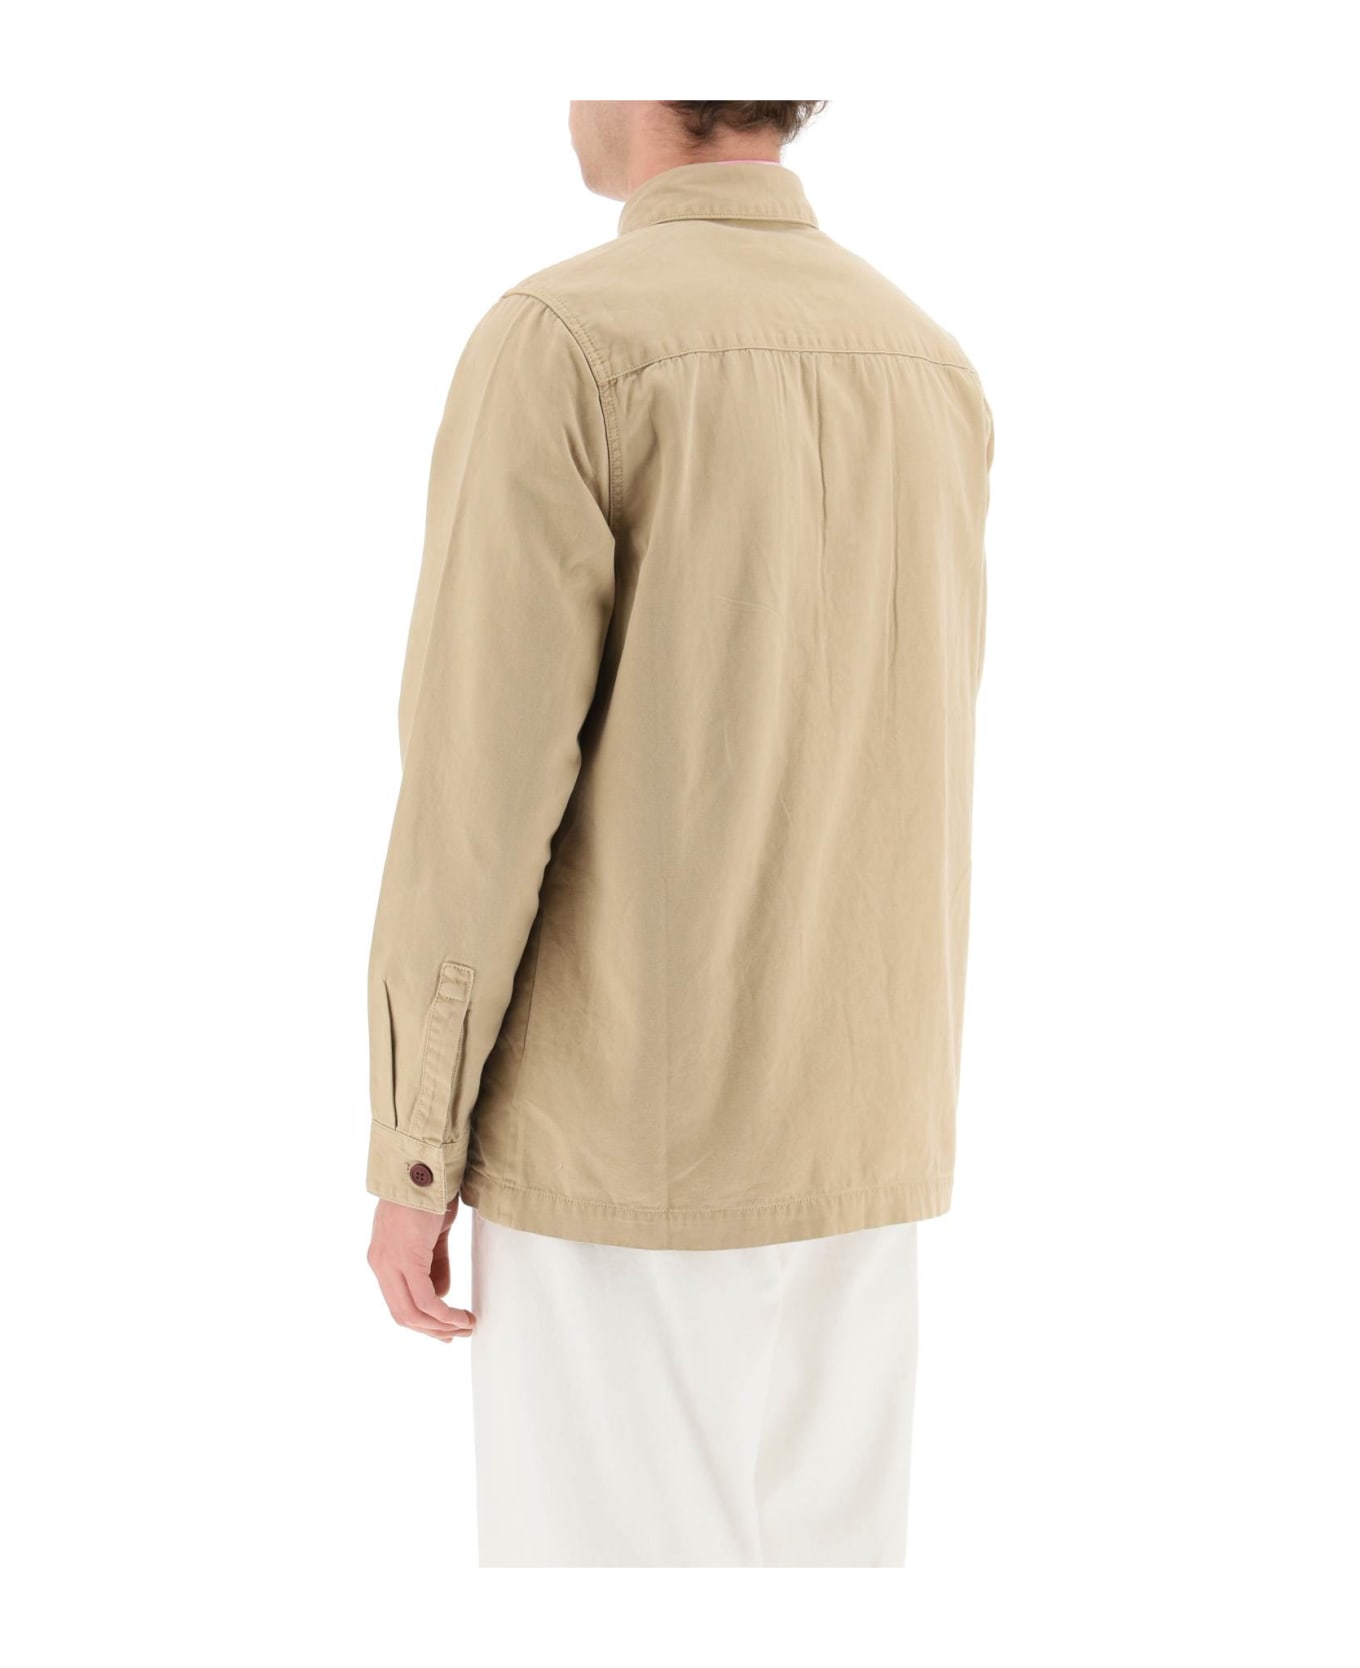 Barbour Washed Overshirt Jacket - WASHED STONE (Beige) シャツ